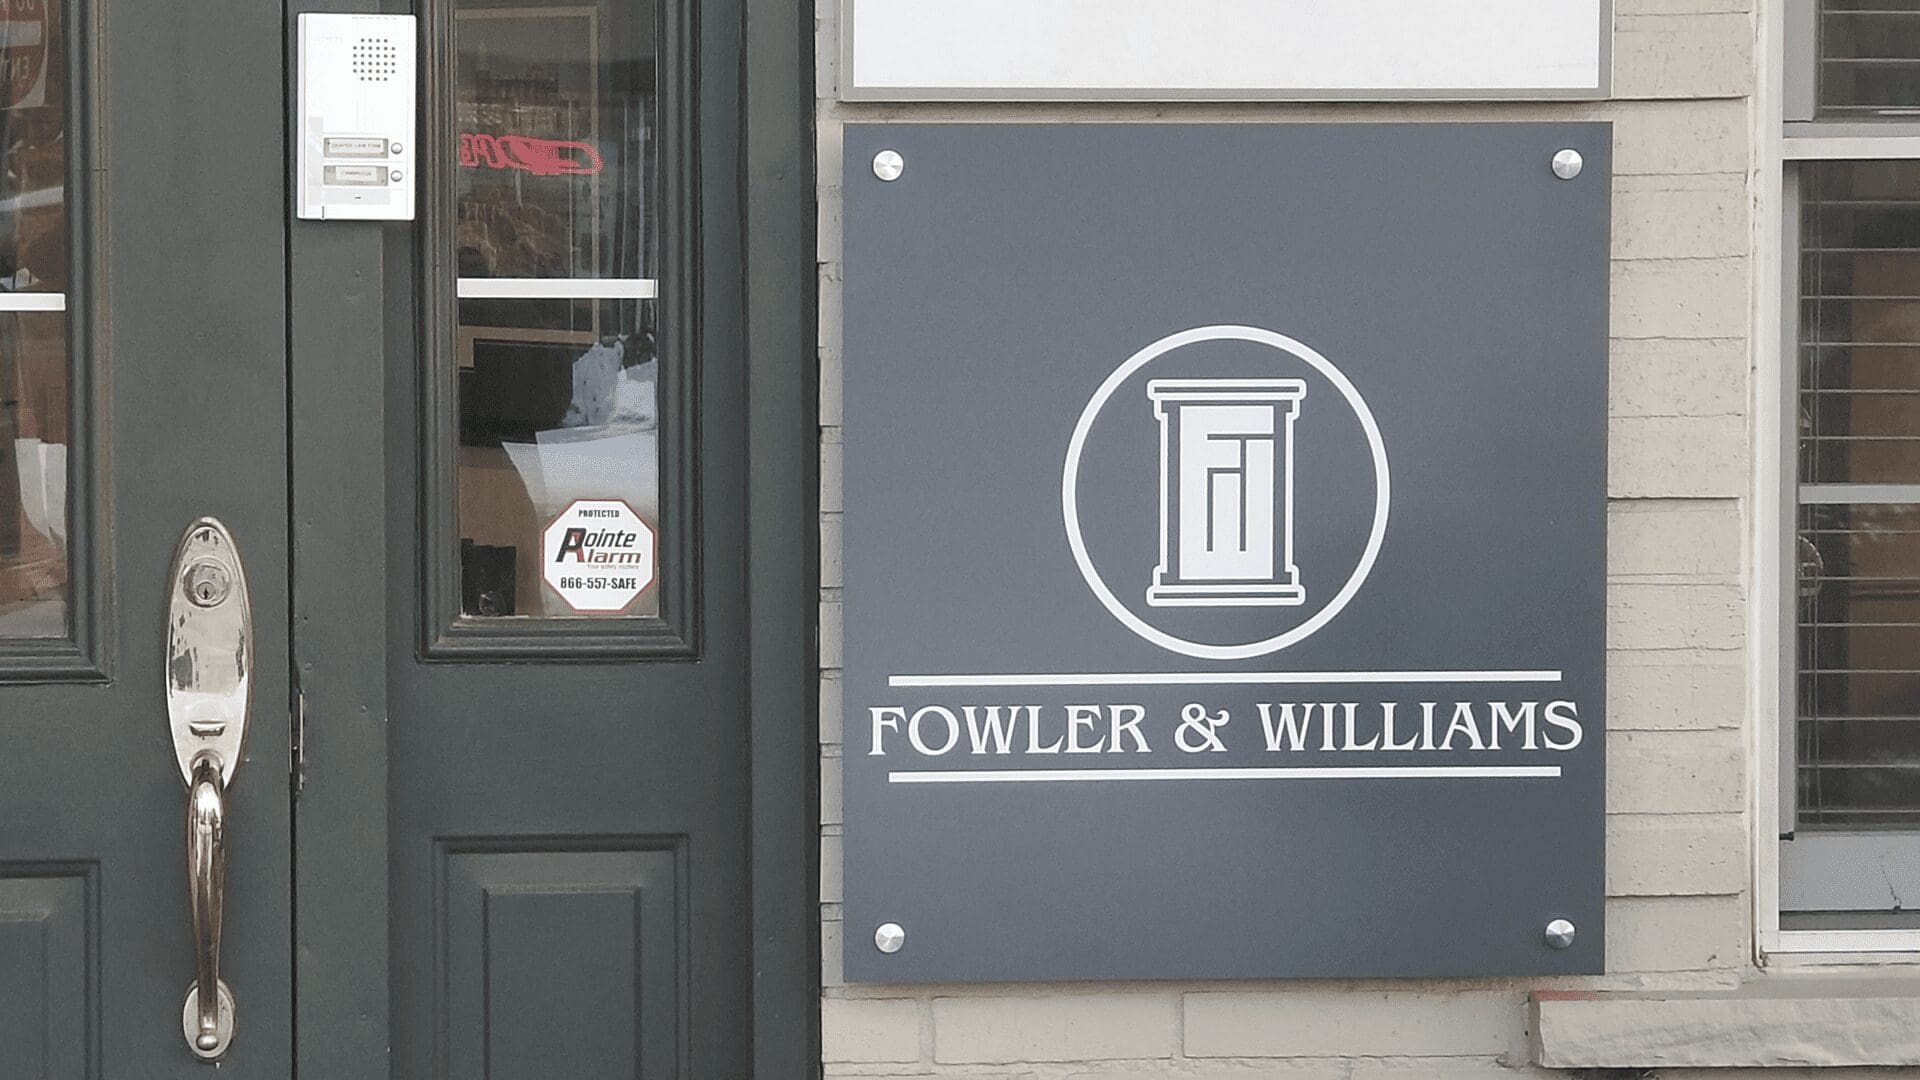 Fowler & Williams – Building Signage